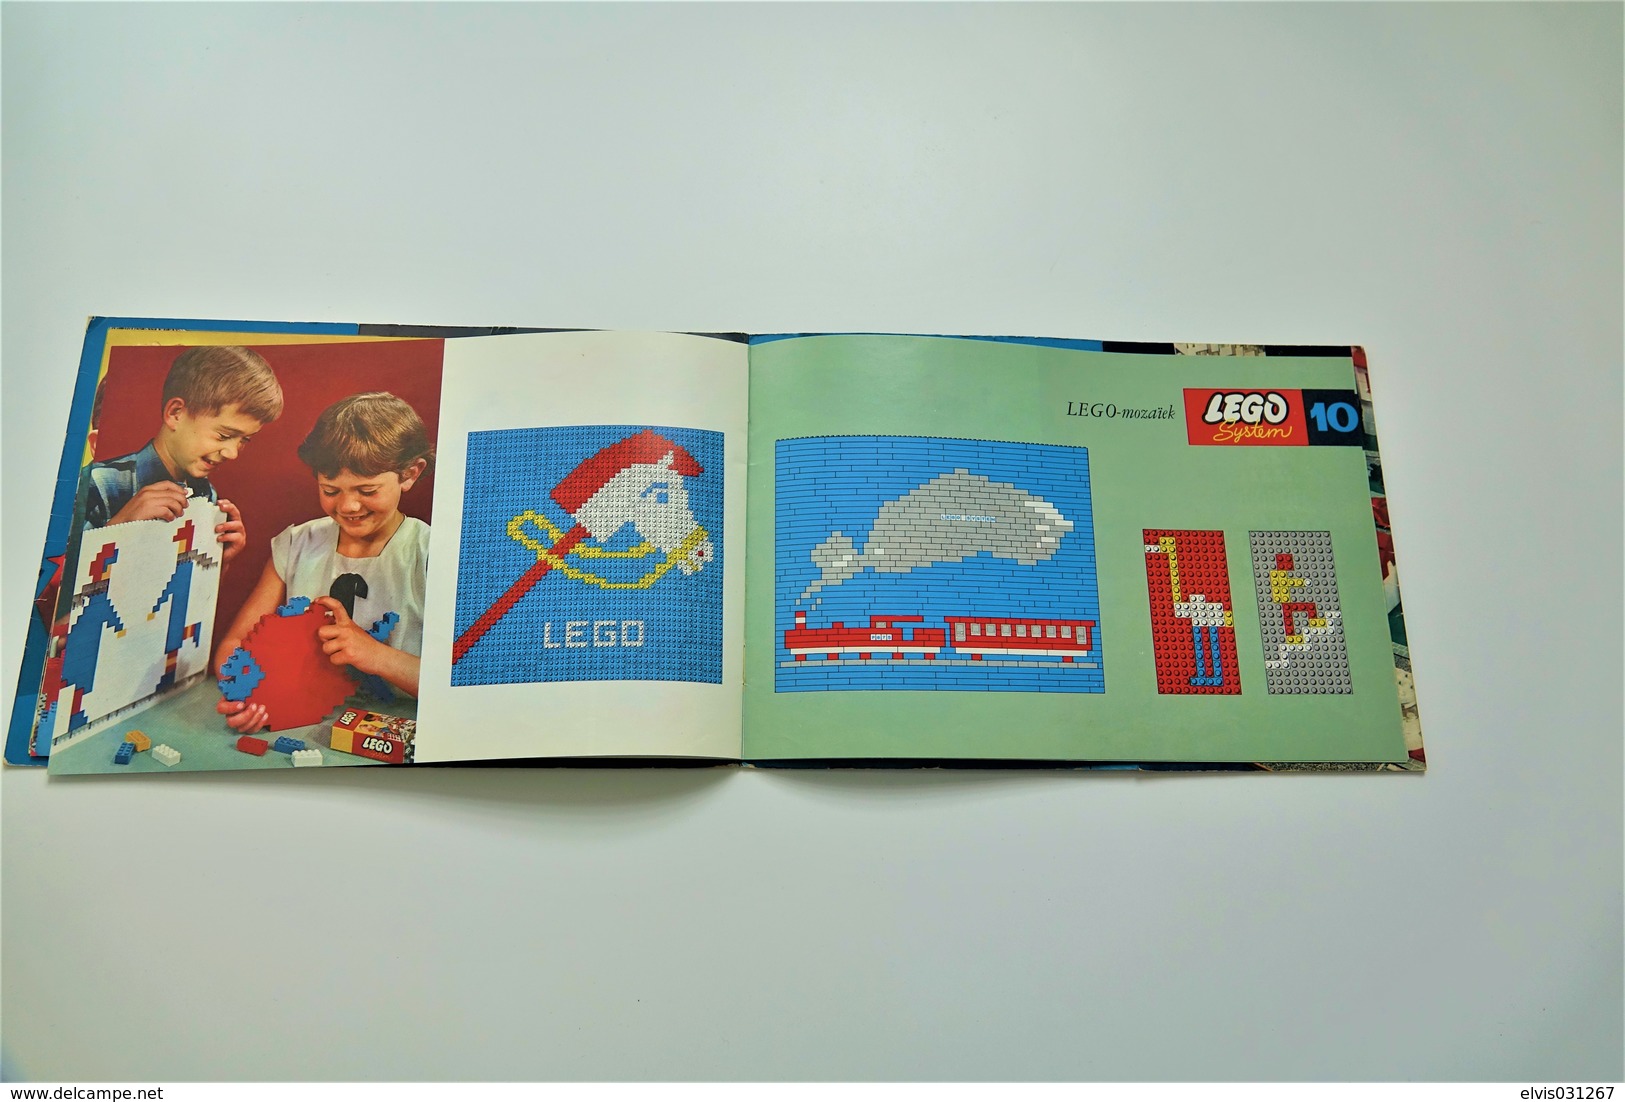 LEGO - IDEEËNBOEK - RaRe - Collectors Item - Original Lego System 1960's - Vintage - Catalogi